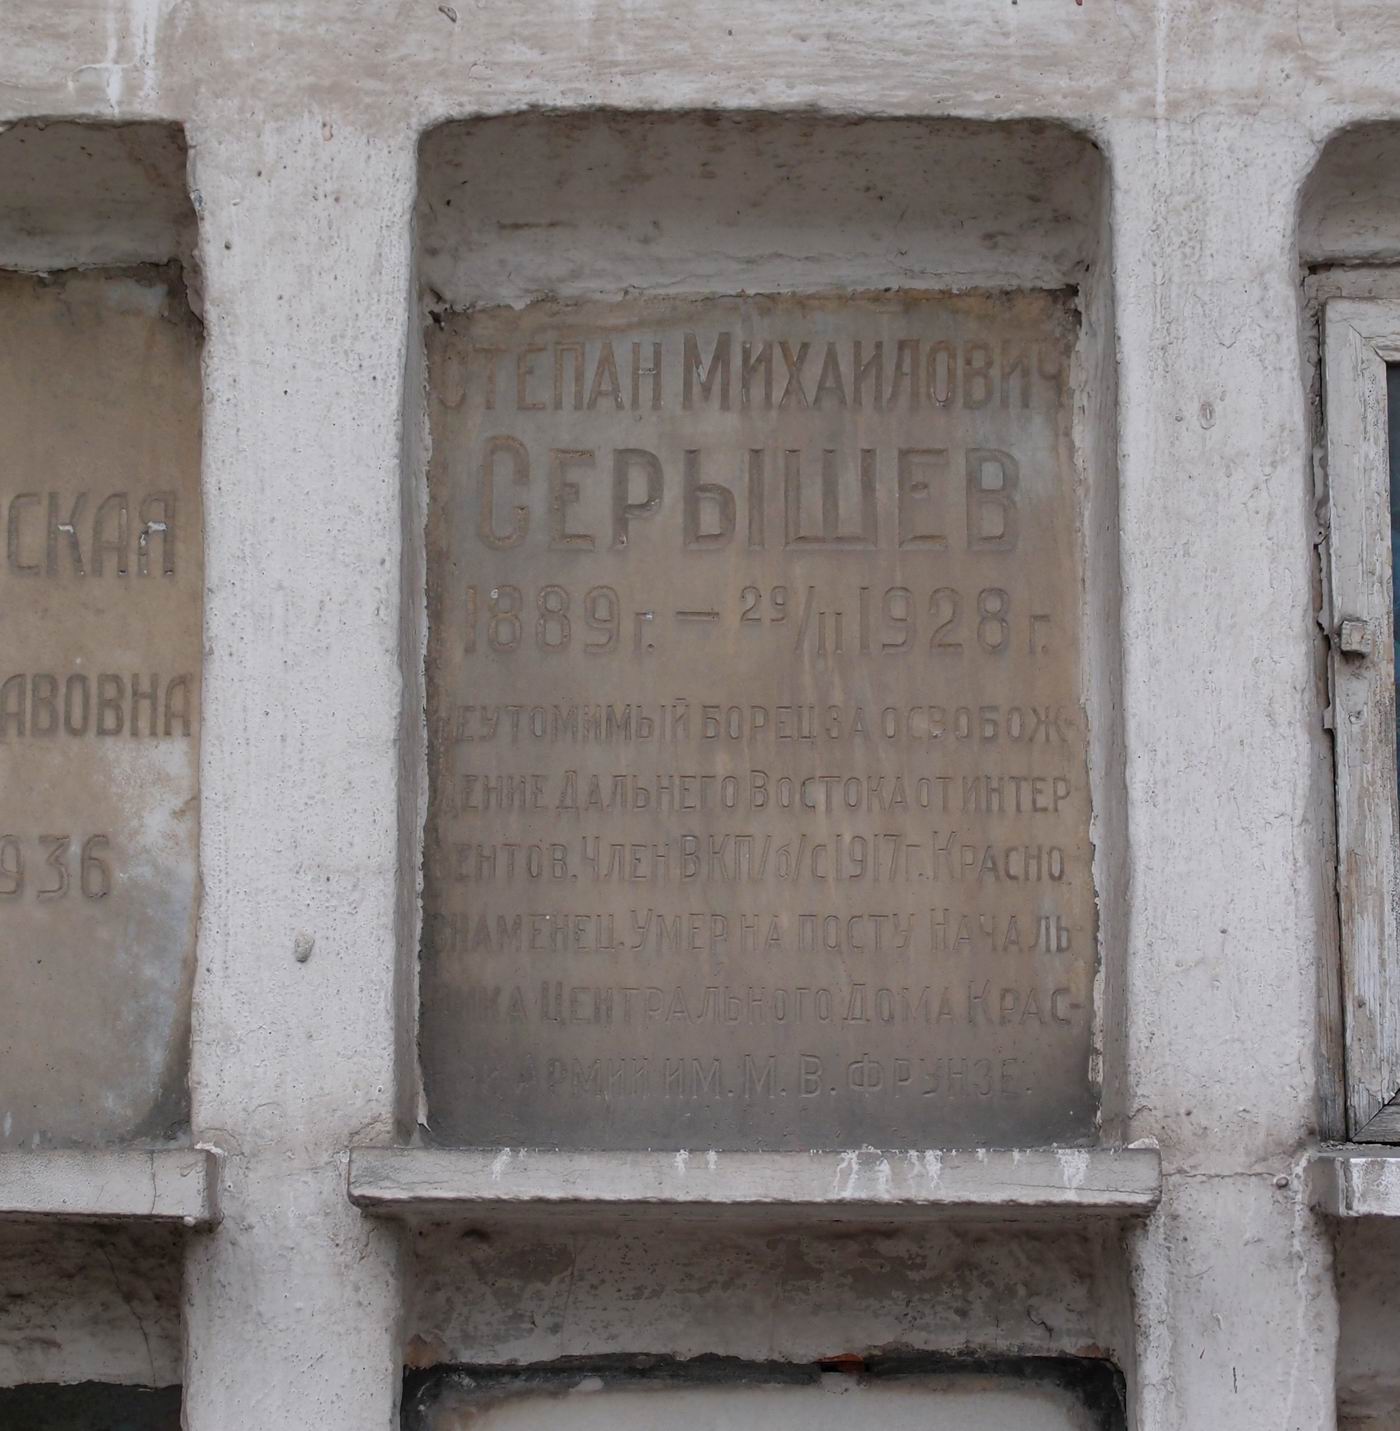 Плита на нише Серышева С.М. (1889–1928), на Новодевичьем кладбище (колумбарий [7]–5–1).